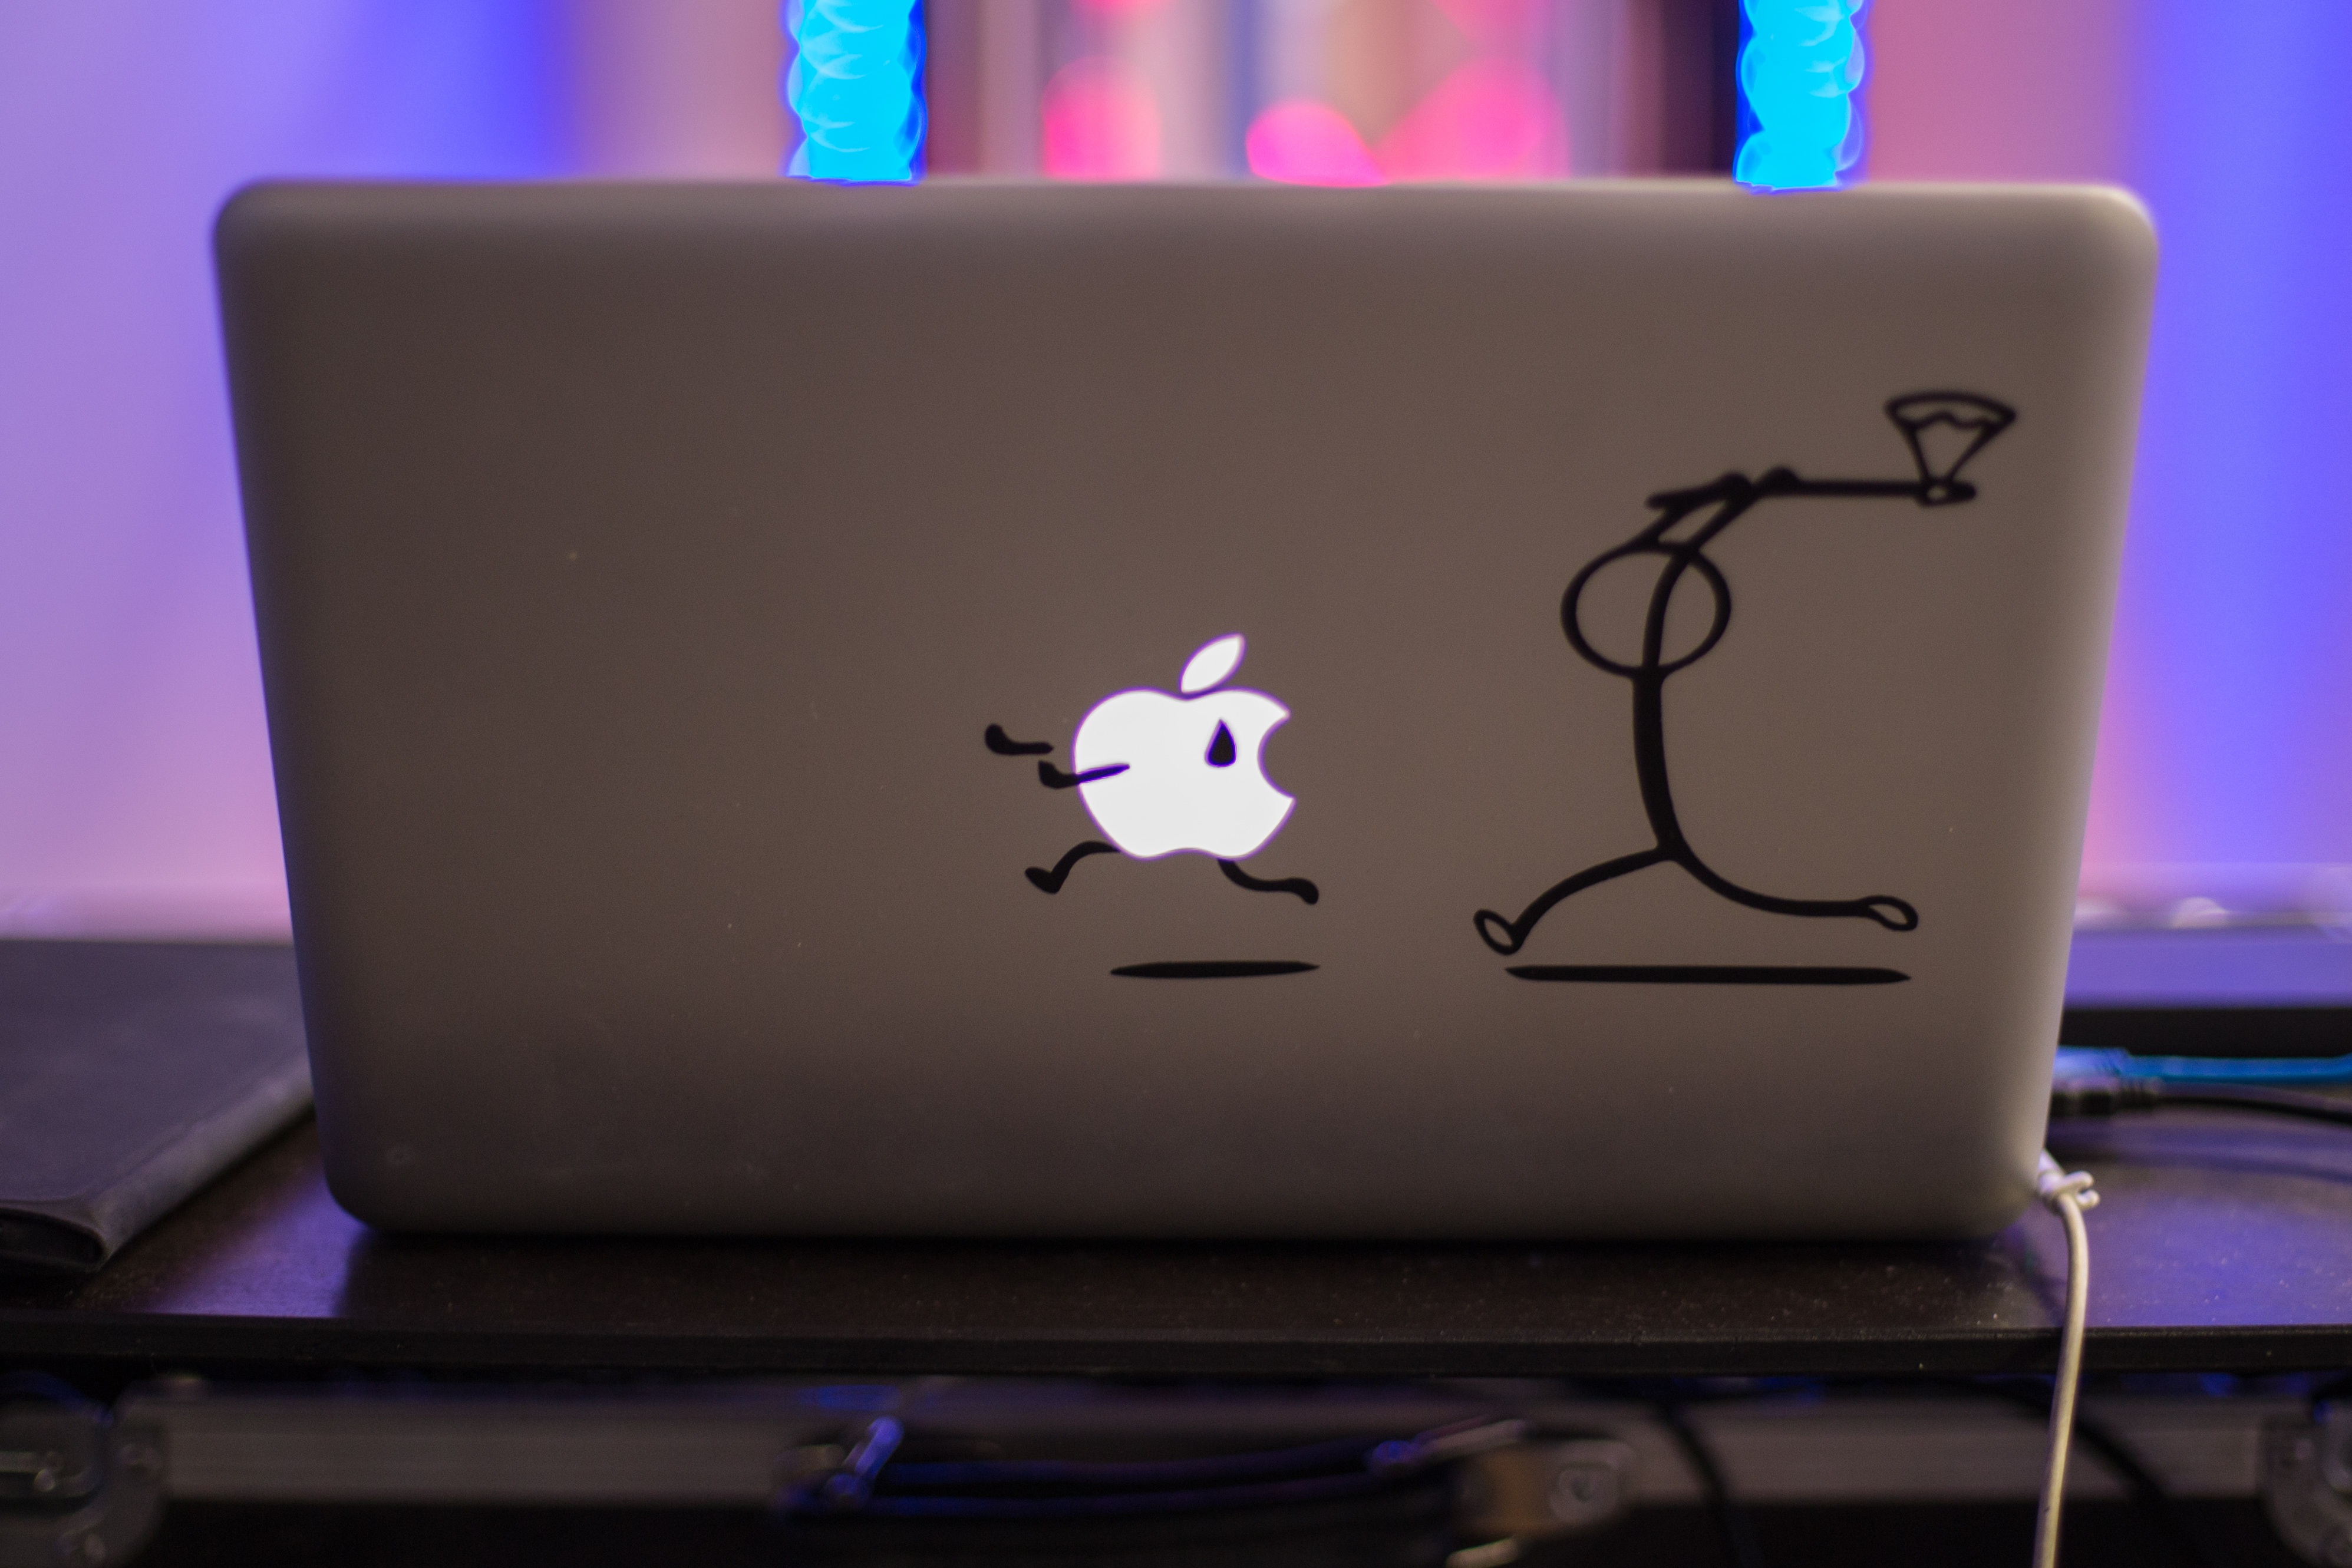 panáčik naháňa Apple logo so sekerou